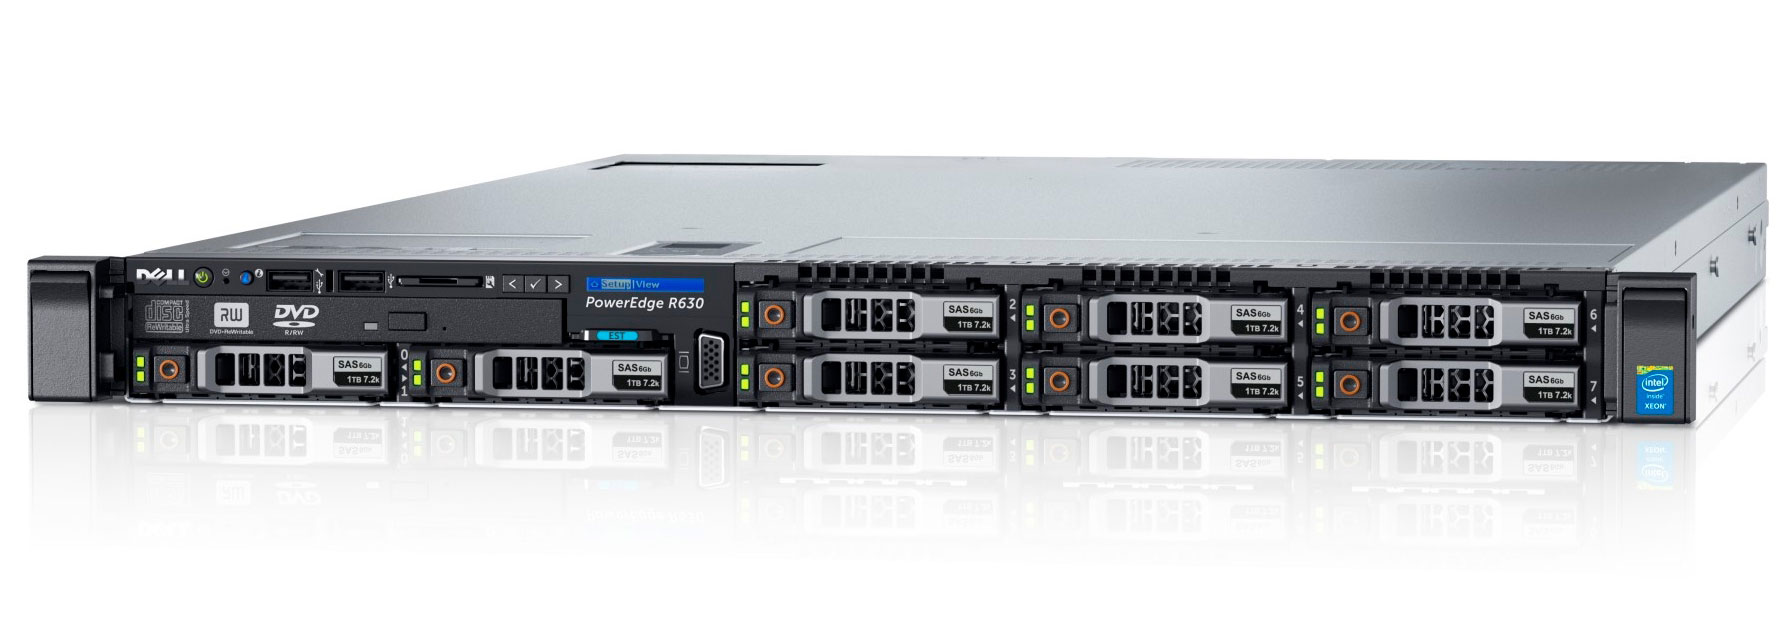 Подробное фото Сервер DELL PowerEdge R630 Xeon 2x E5-2699v3 128Gb 2133P DDR4 8x noHDD 2.5", SAS RAID Perc H730 mini, 1024Mb, DVD, 2*PSU